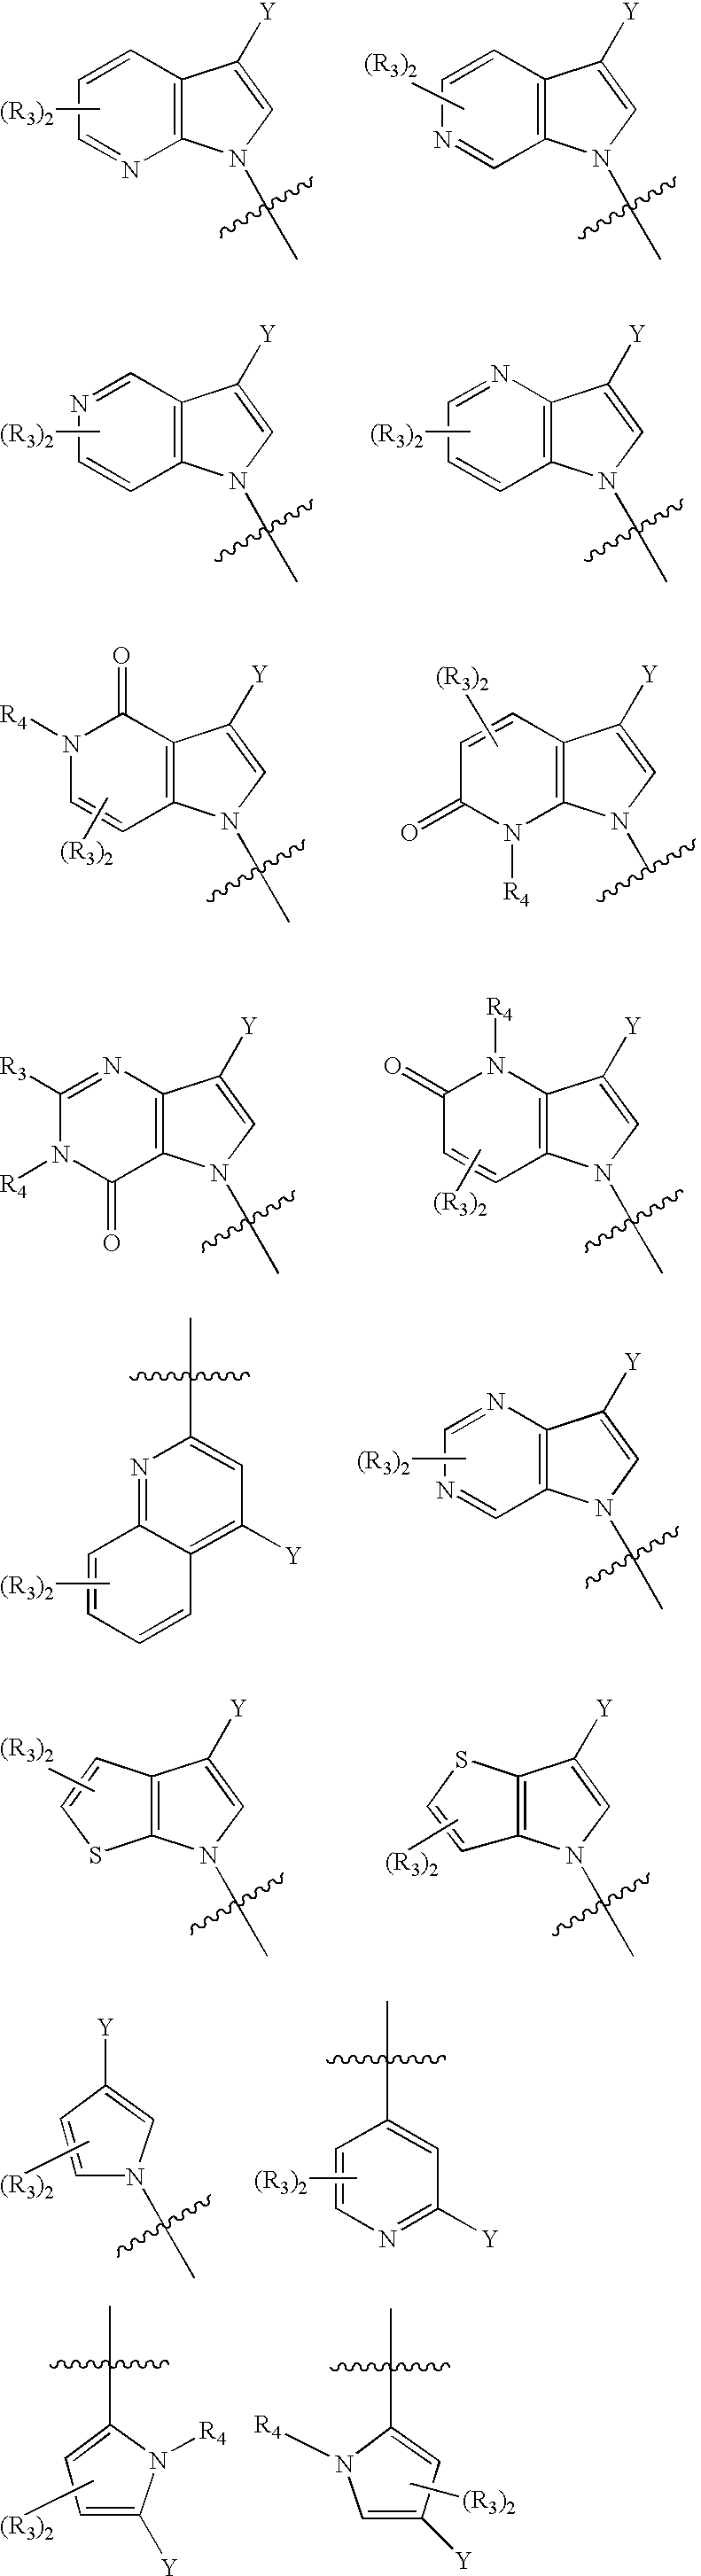 Substituted heteroarylalkanoic acids